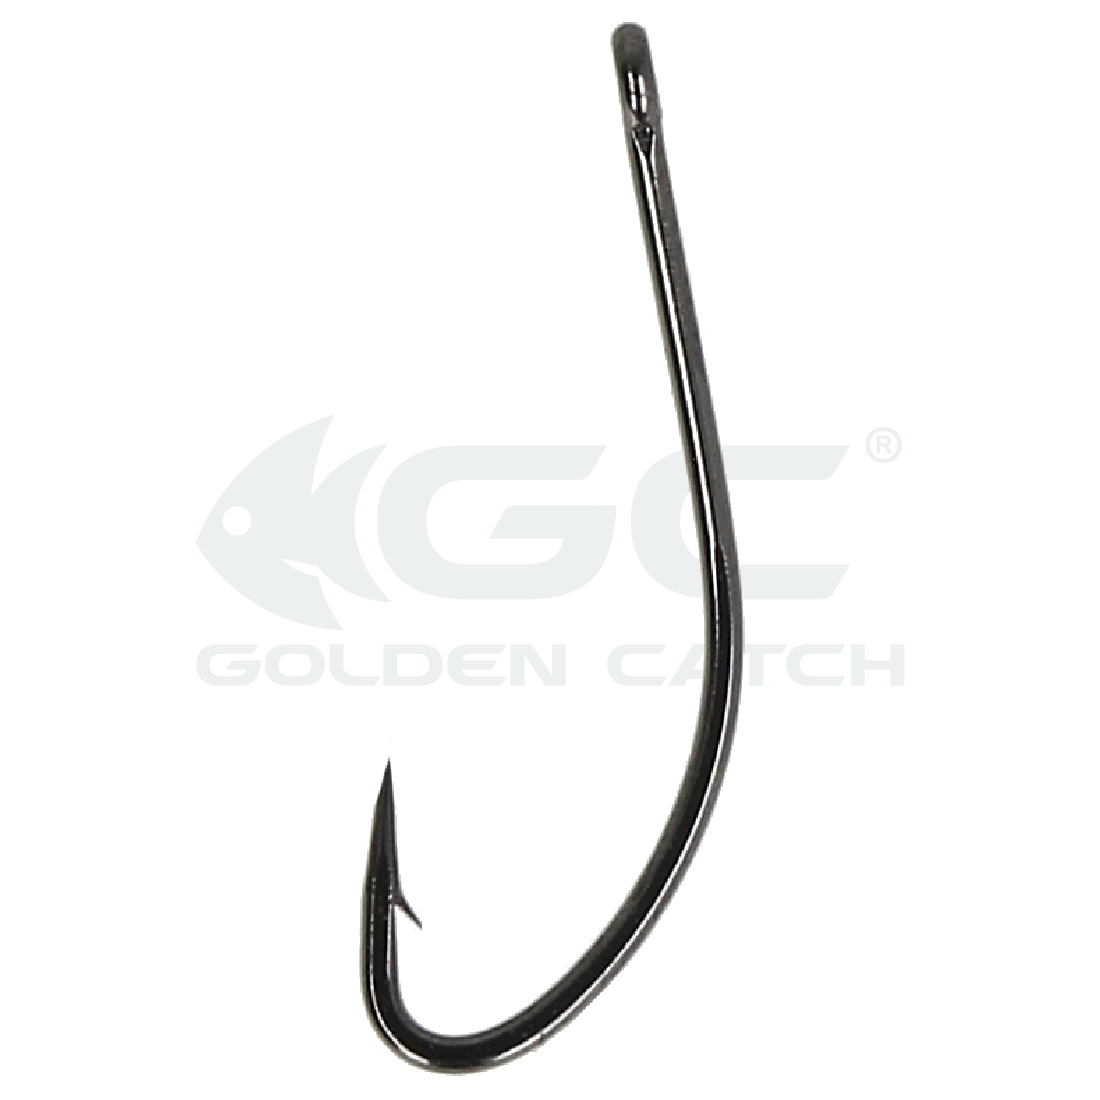 Golden Catch Hook Feeder 1011BN